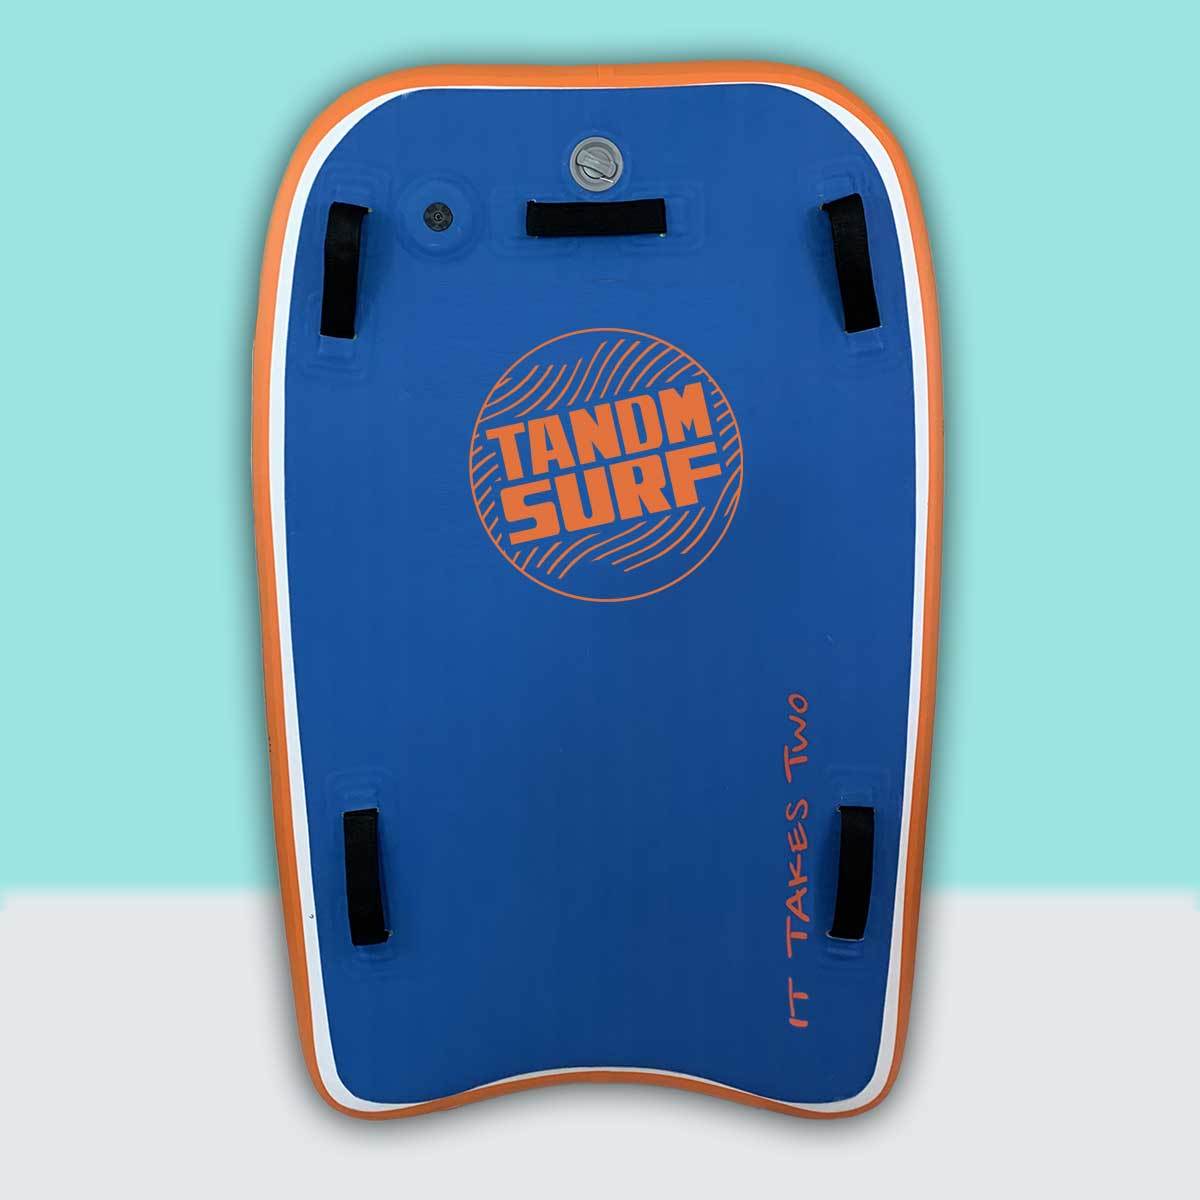 TANDM Surf Bodyboard - 4 Pack Wholesale